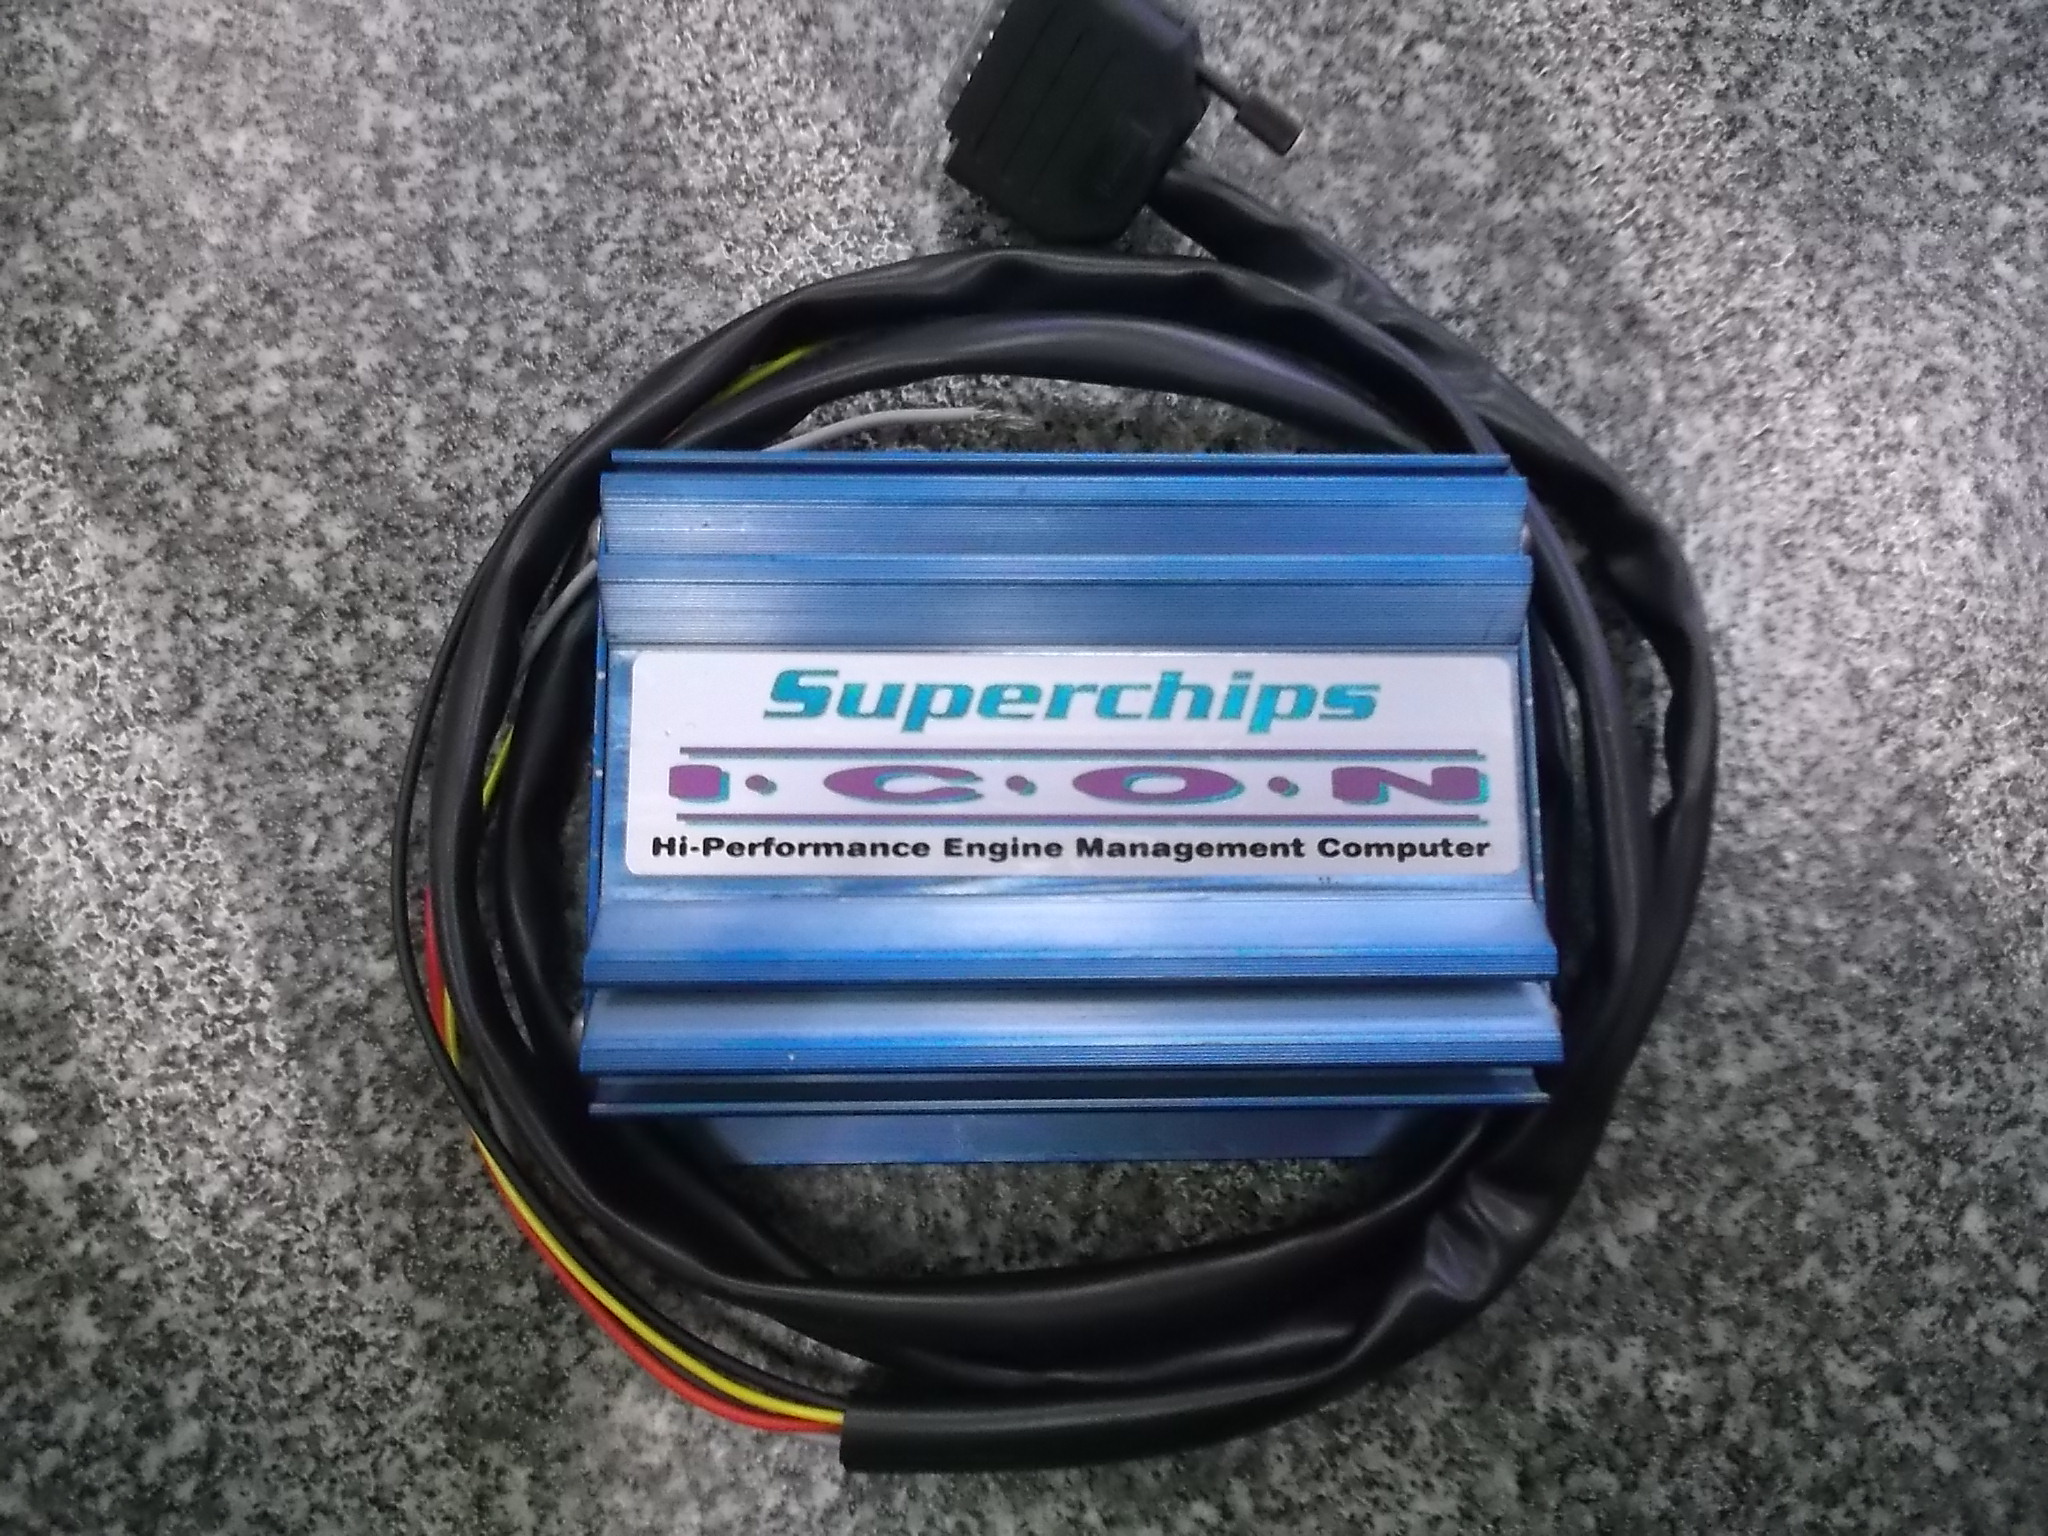 Superchips　icon　パワーアップコンピューター